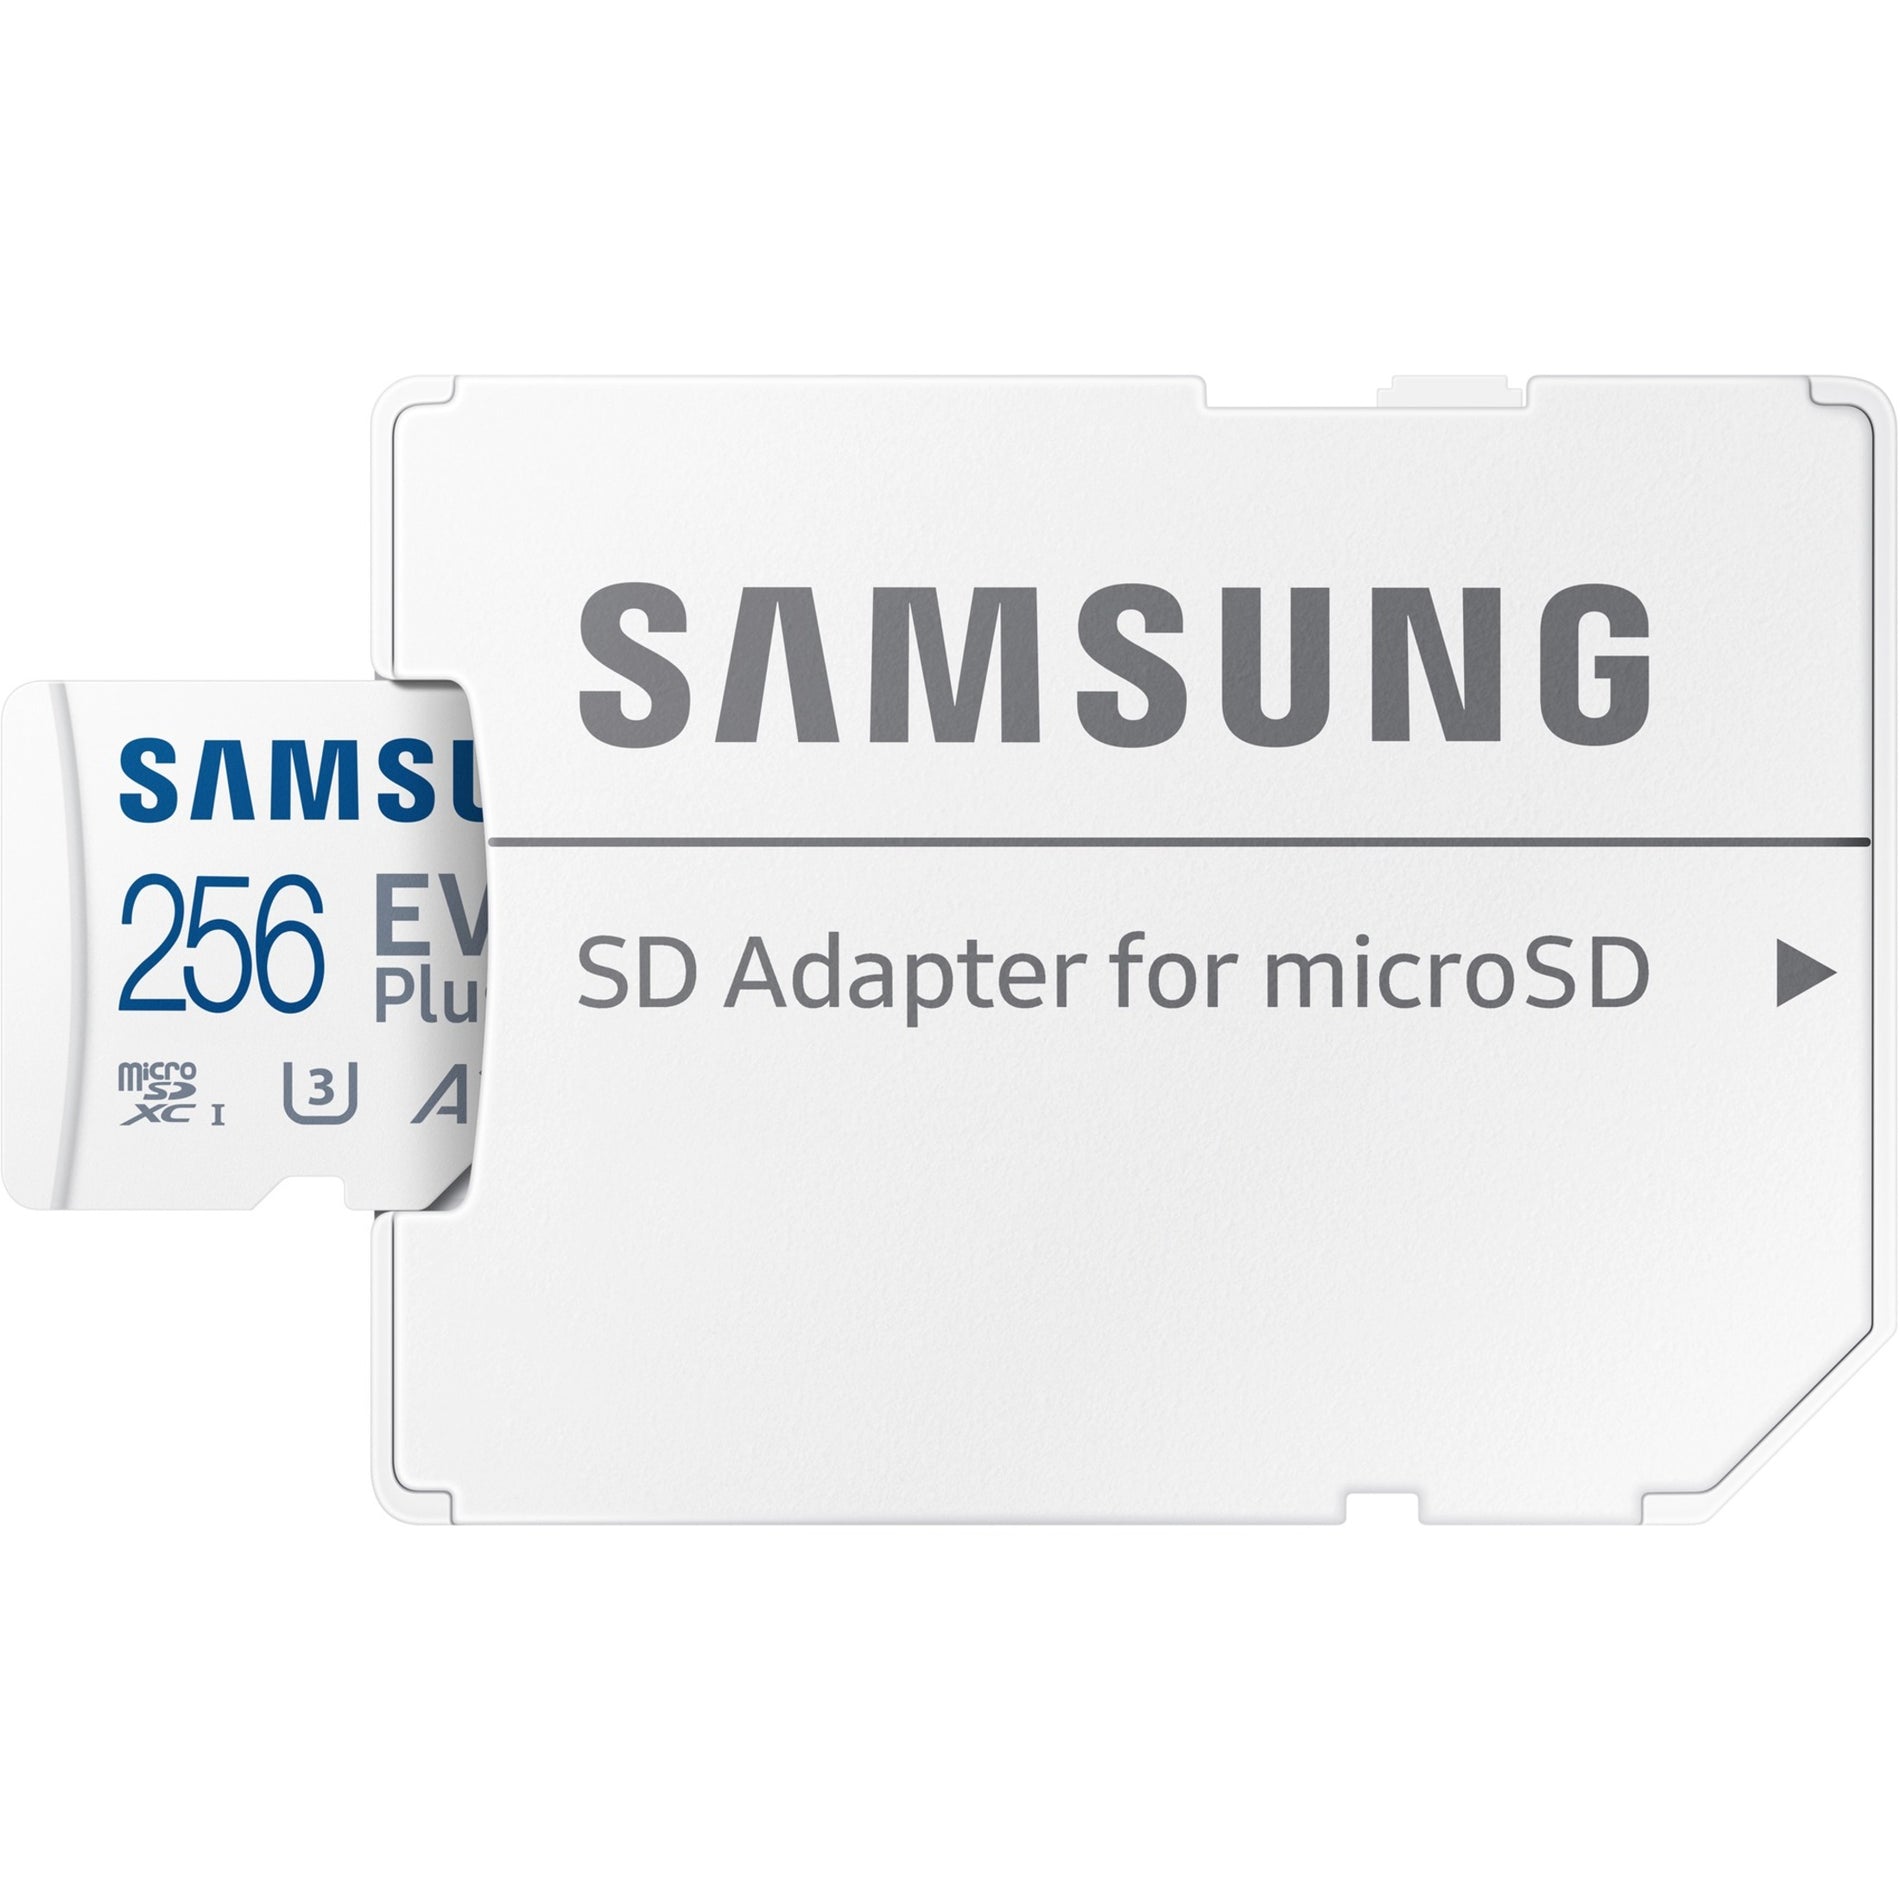 Samsung MB-MC256KA/AM EVO Plus 256GB microSDXC Card, 10 Year Warranty, 130 MB/s Read Speed, Class 10/UHS-I (U3), A1 Application Performance